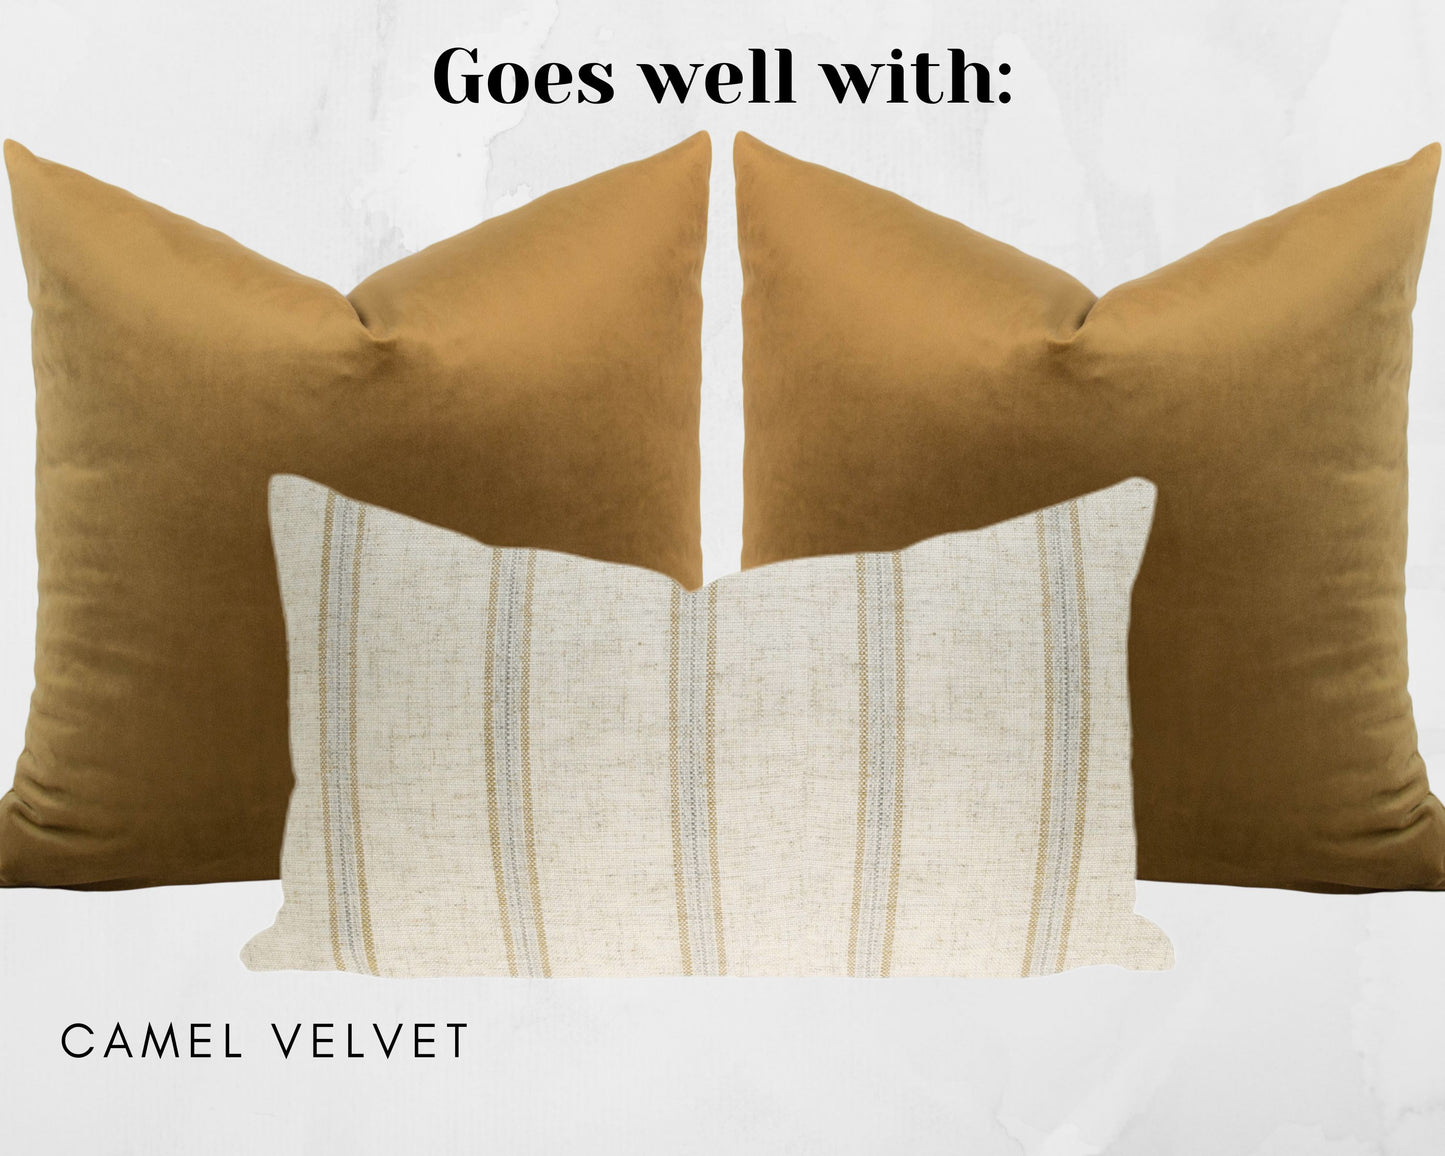 Oatmeal & Gold Striped Pillow Cover, 12x20" lumbar